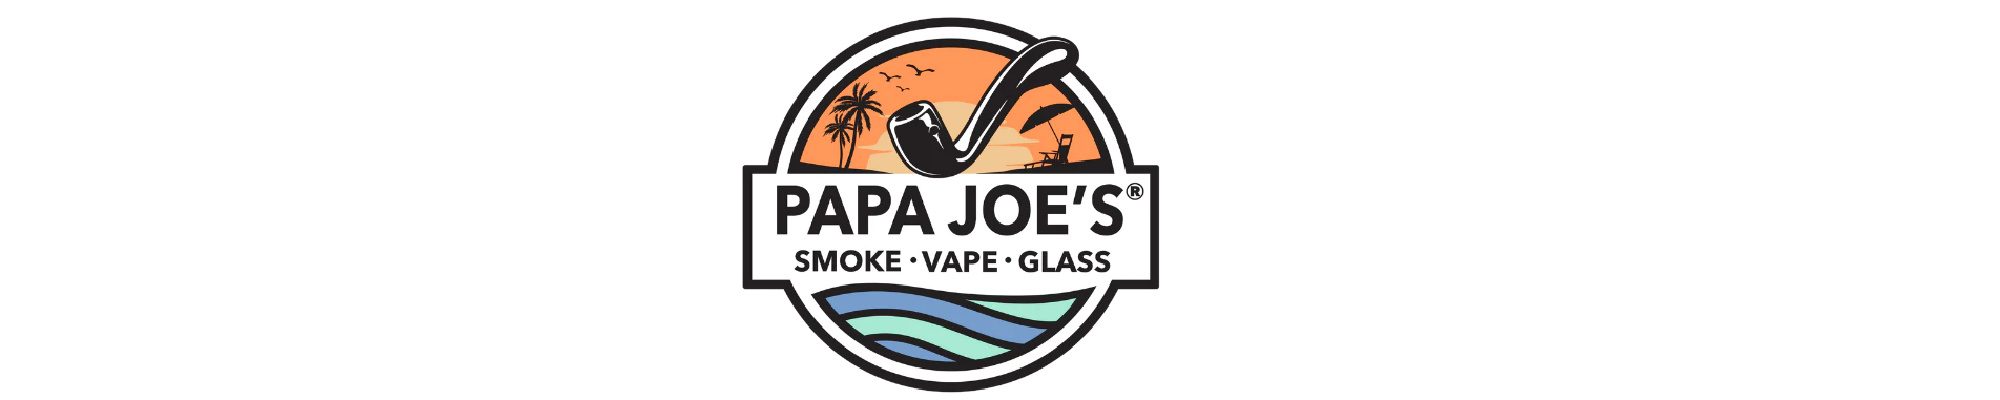 image of papa joe's smoke shop in harrisonburg va